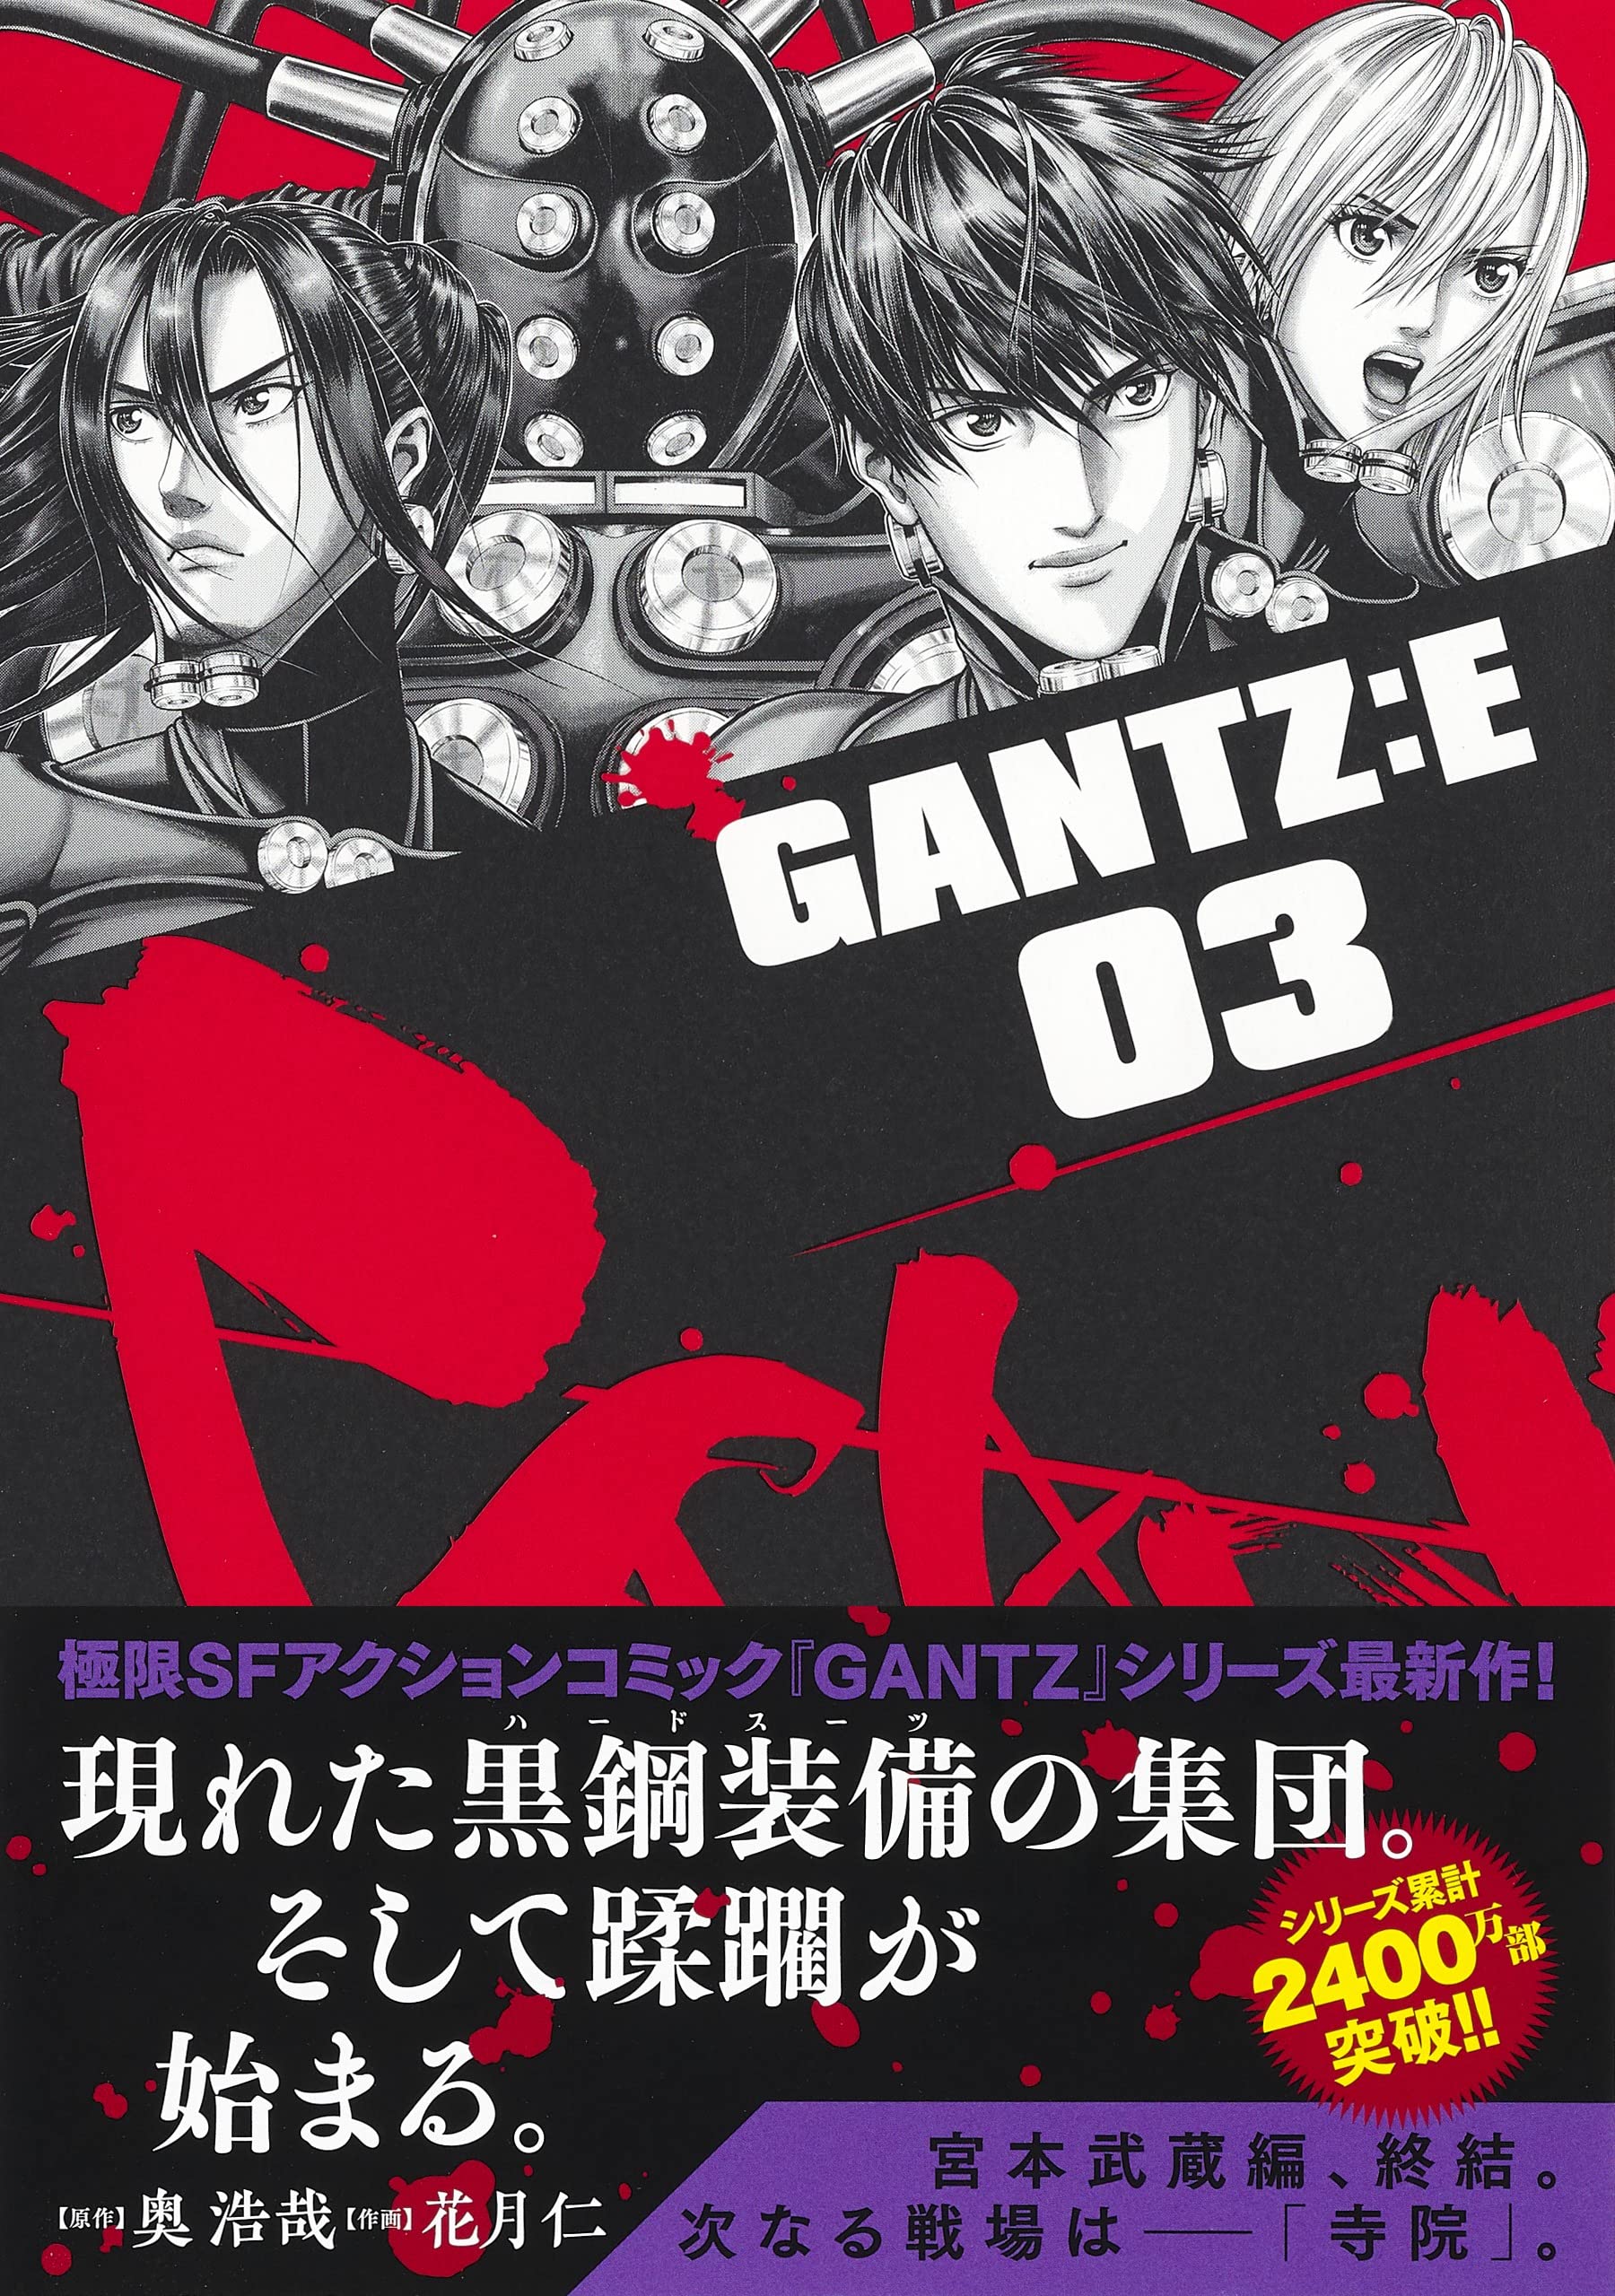 GANTZ:E 3 – Japanese Book Store